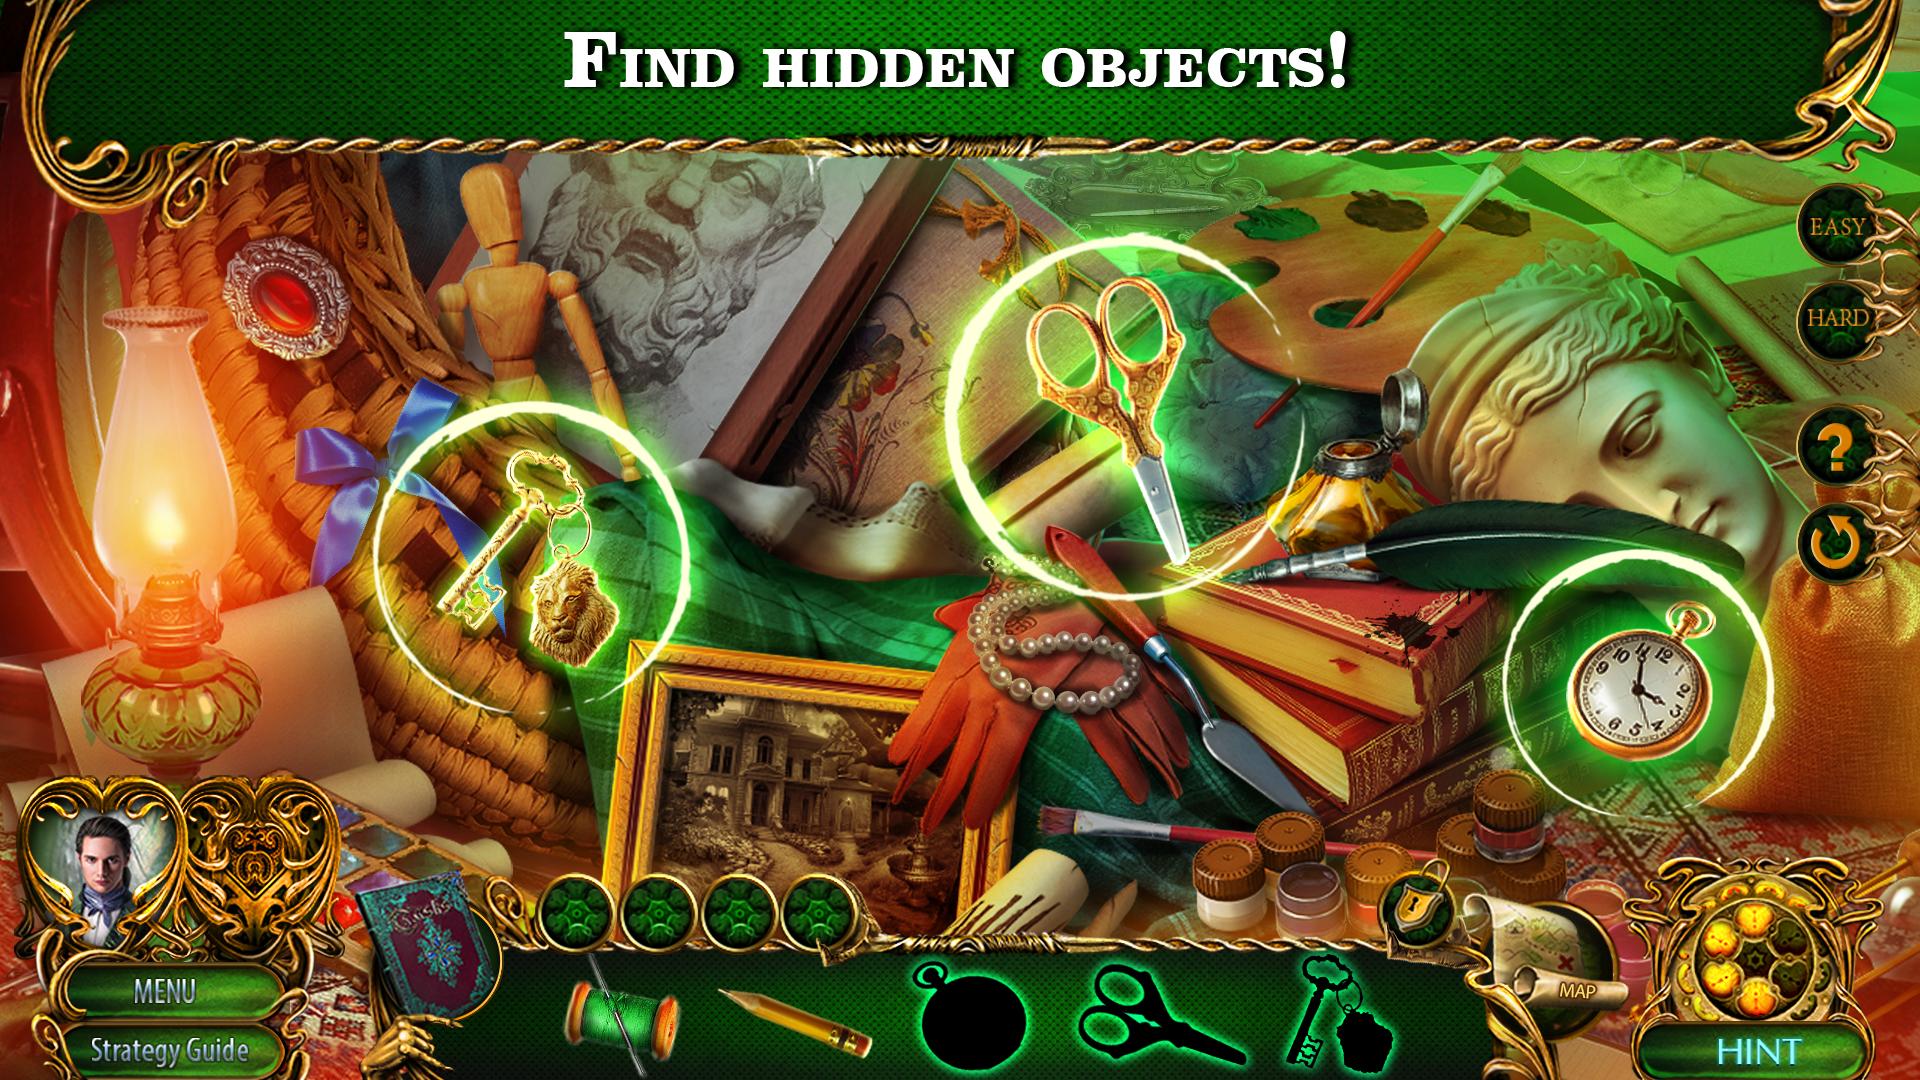 Hidden Objects - Dark Romance 7 (Free To Play) 1.0.5 Screenshot 11